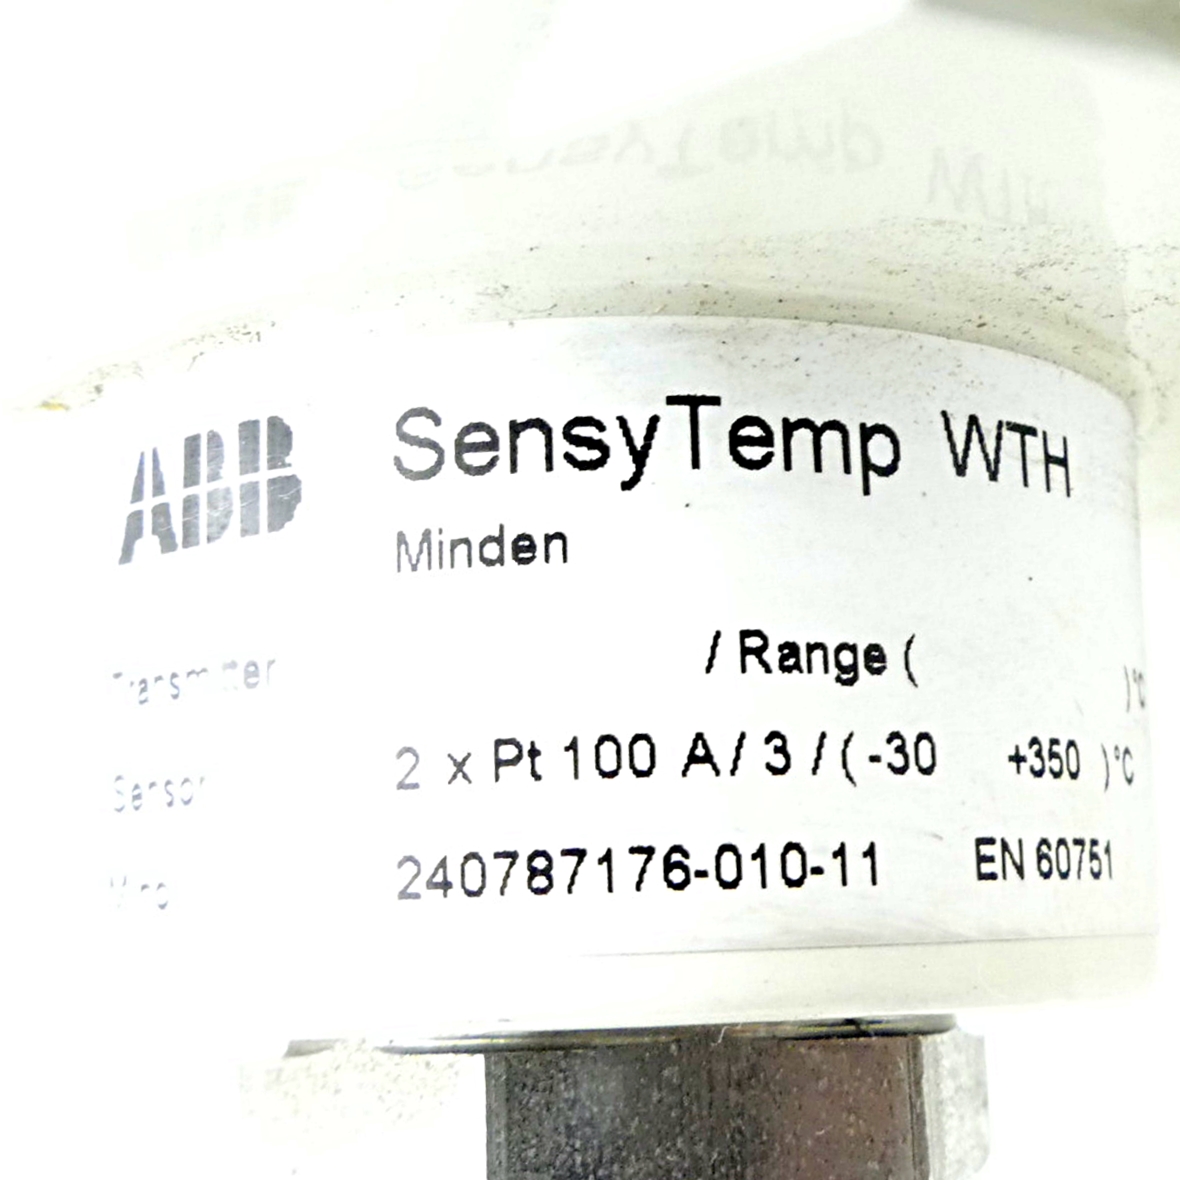 Temperatursensor SesnyTemp WTH 